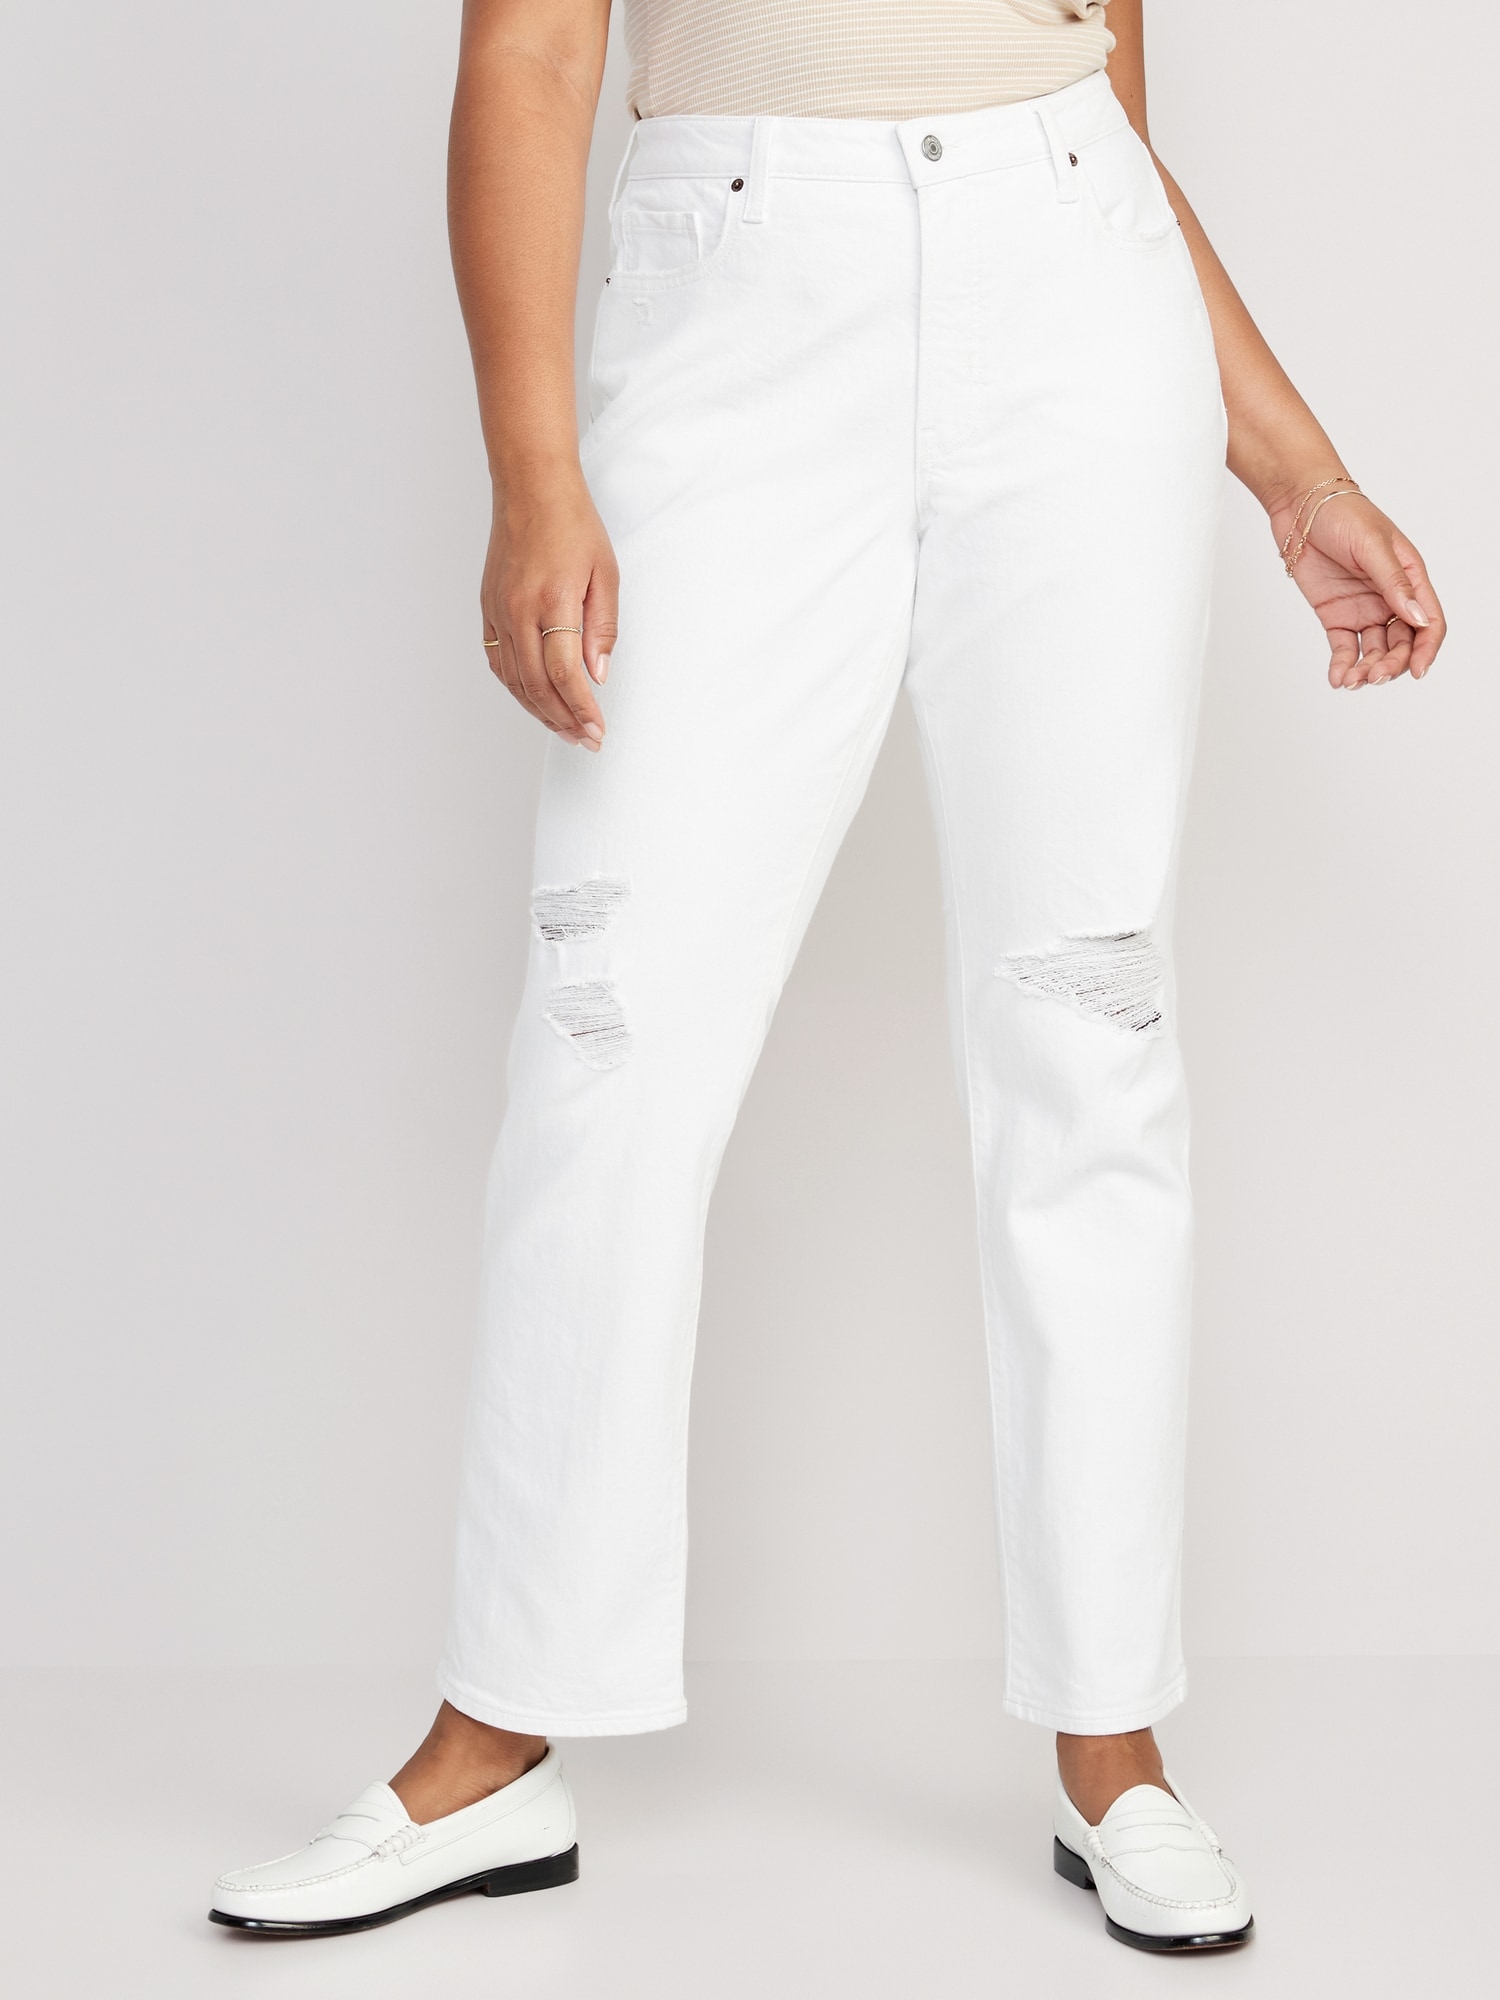 Ledig Ark sagsøger High-Waisted OG Straight White-Wash Ripped Jeans for Women | Old Navy